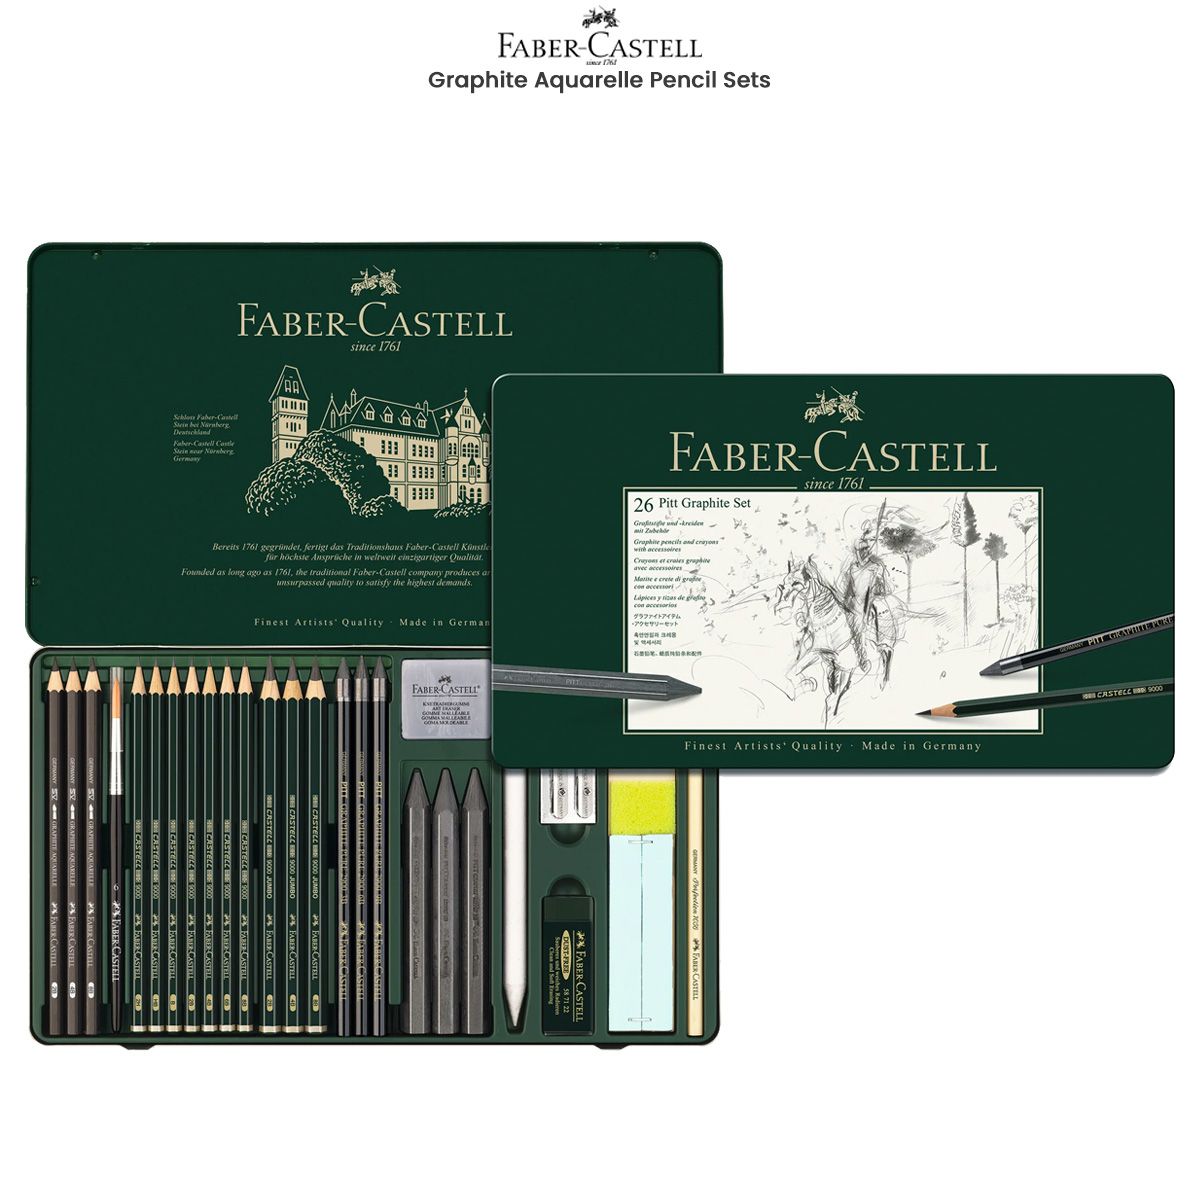 https://www.jerrysartarama.com/media/catalog/product/cache/ecb49a32eeb5603594b082bd5fe65733/f/a/faber-castell-graphite-aquarelle-pencils-main_1.jpg